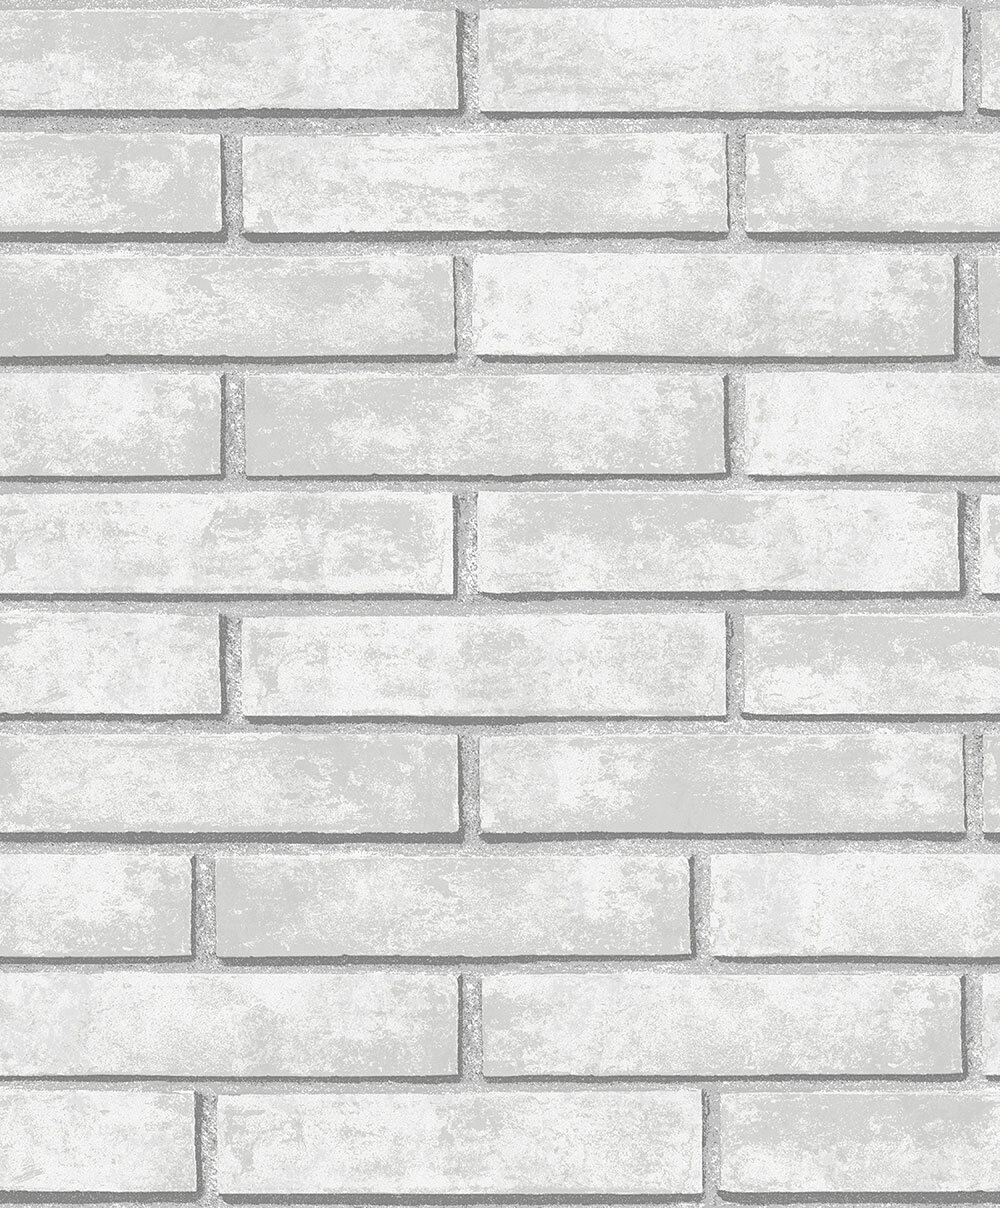 Brick Wallpaper - Grey - by NextWall